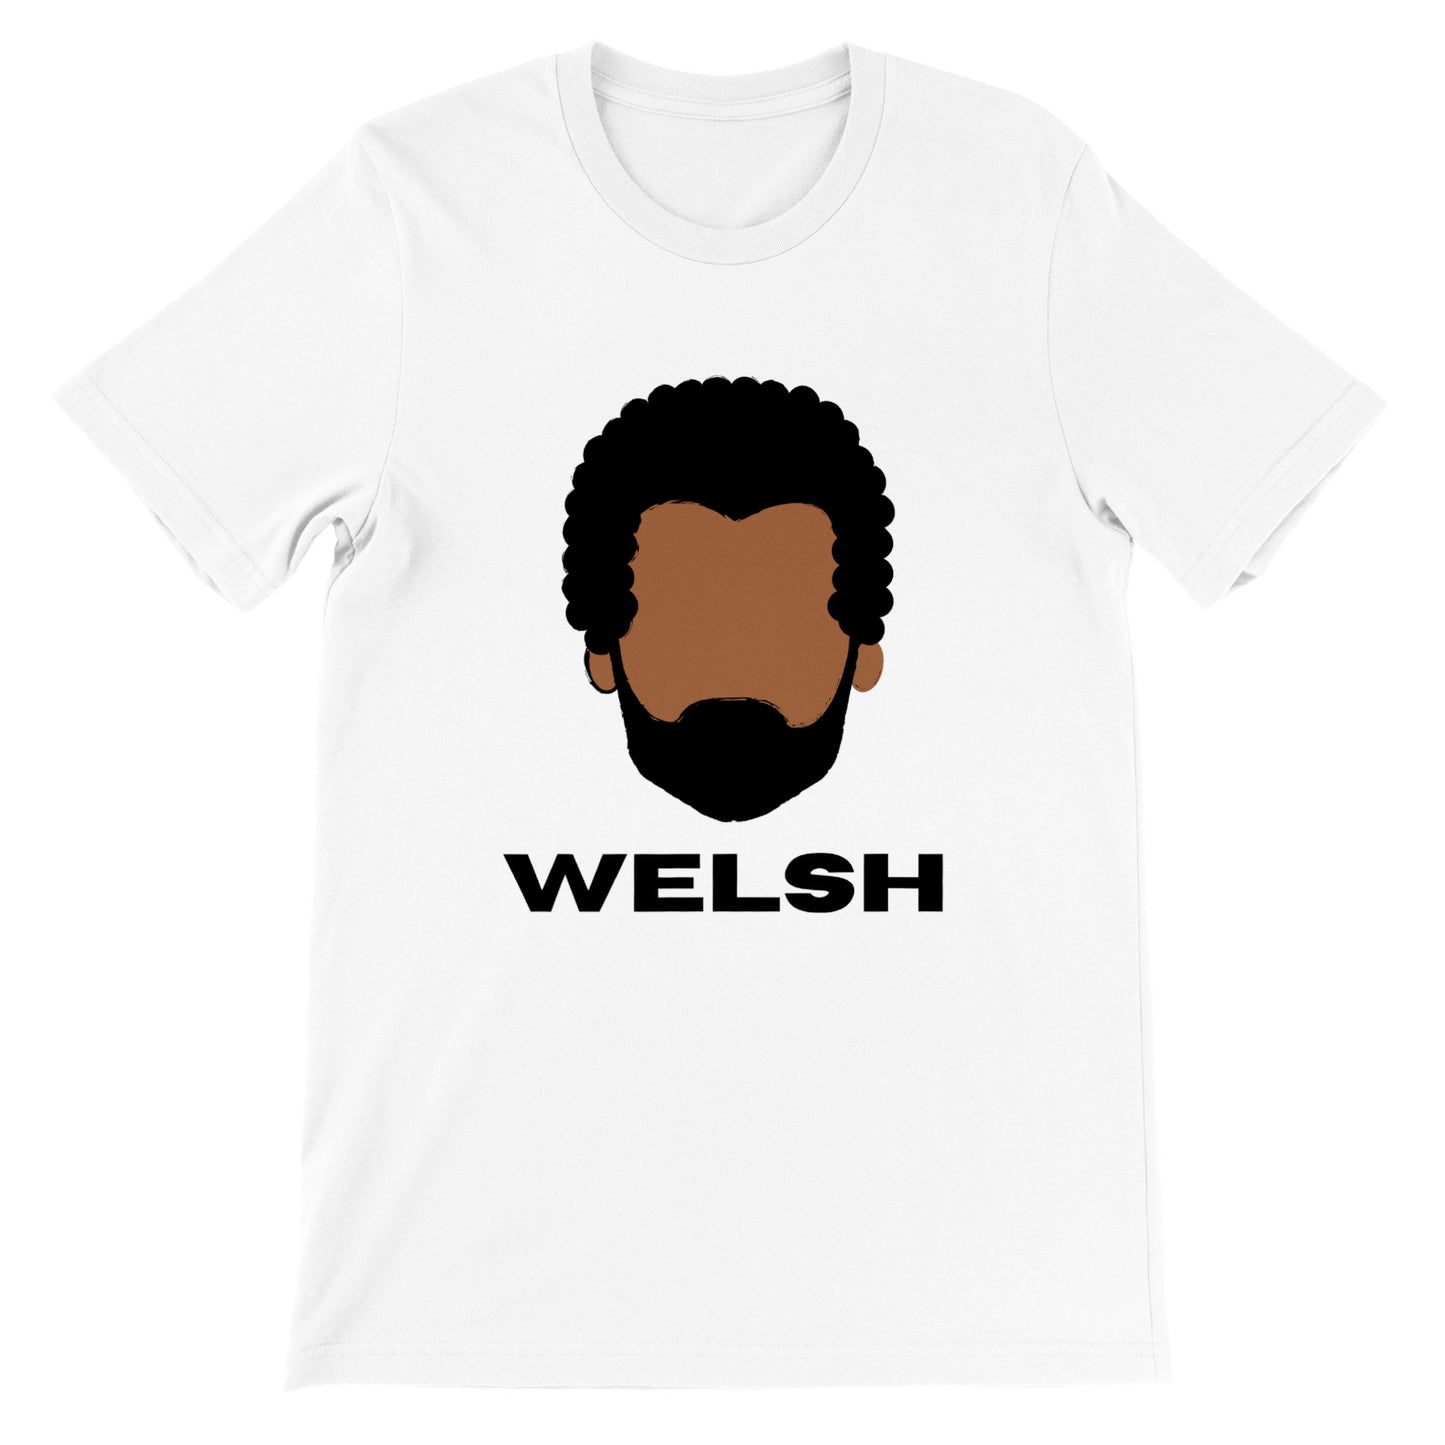 Welsh - Premium Unisex Crewneck T-shirt